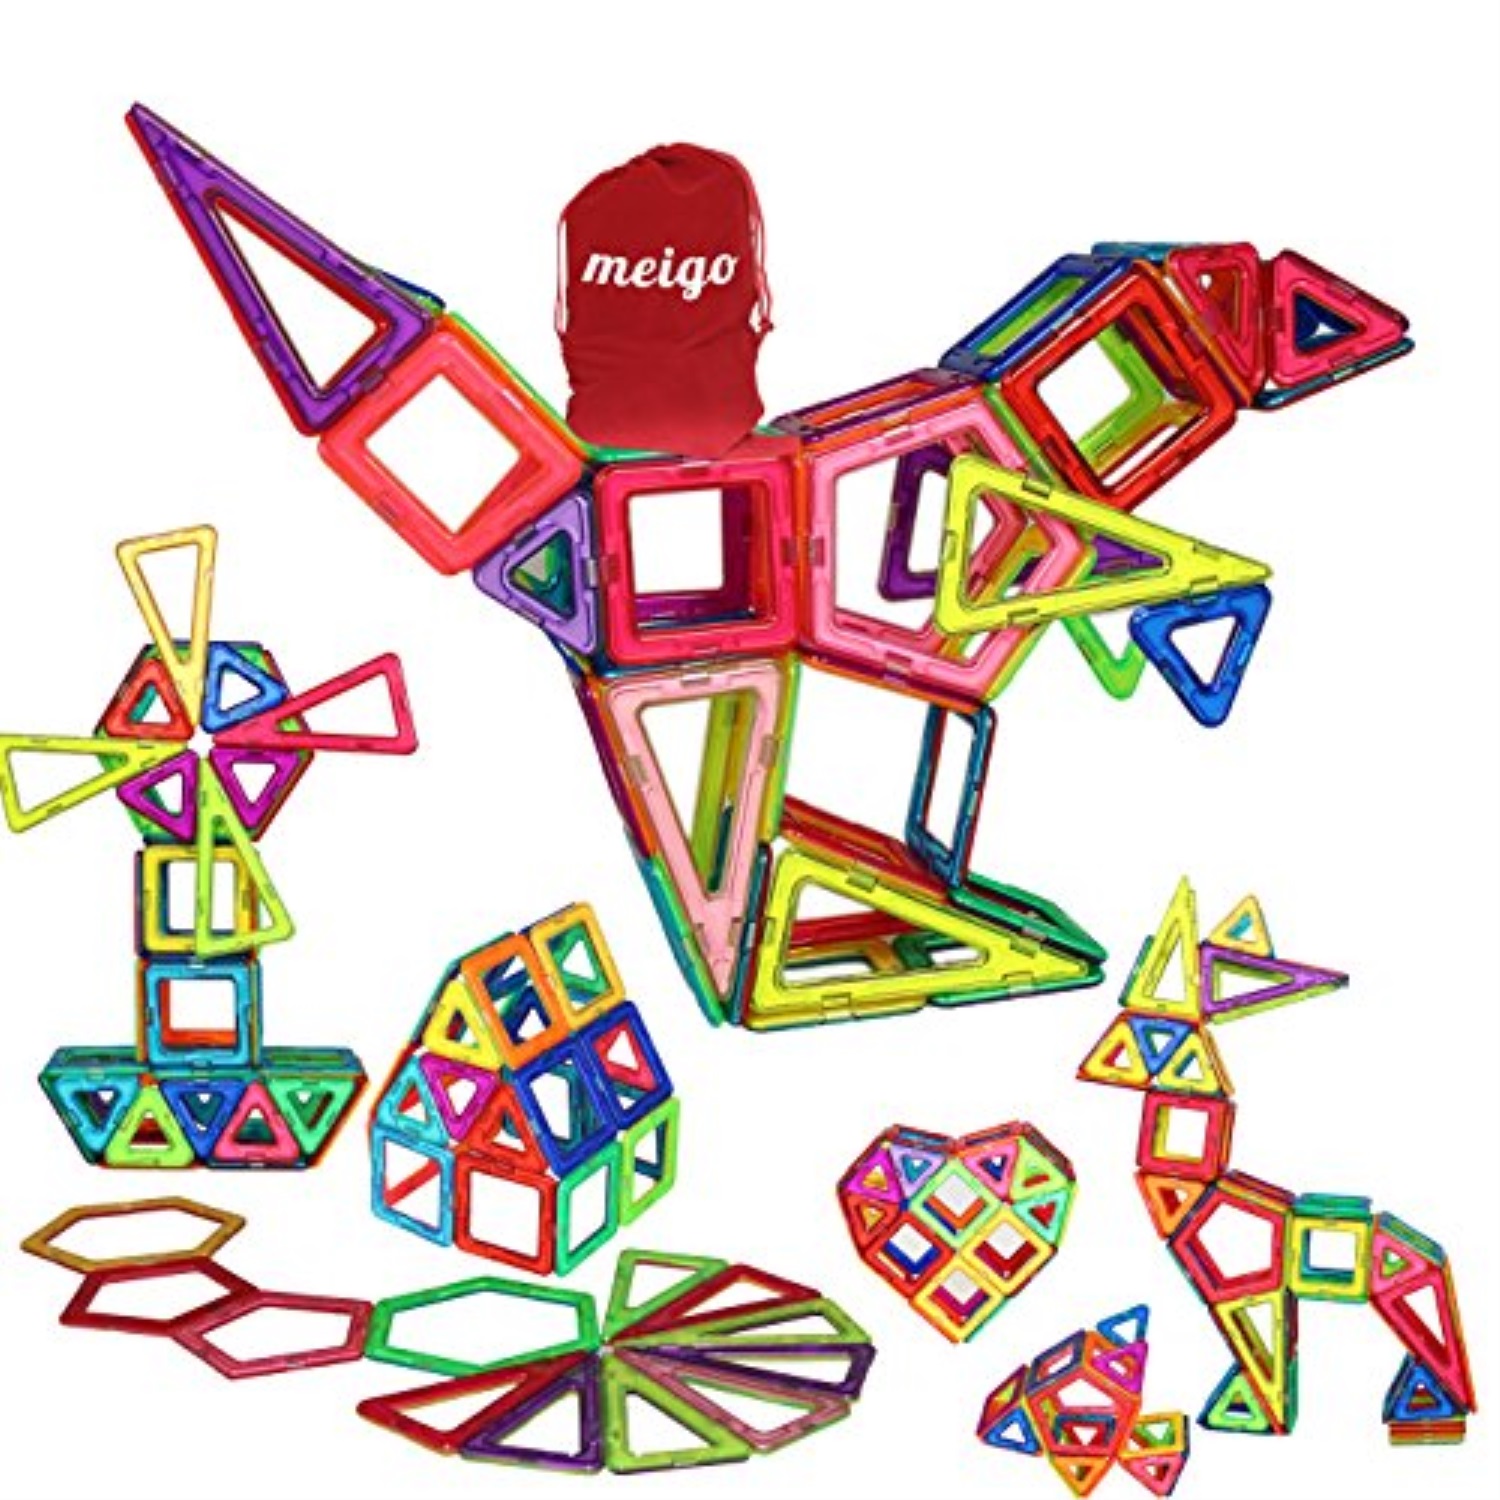 MEIGO MEIGO Magnetic Blocks - Kids Magnetic Building Tiles Set STEM Educational Magnet Toys for Toddlers 70PCS